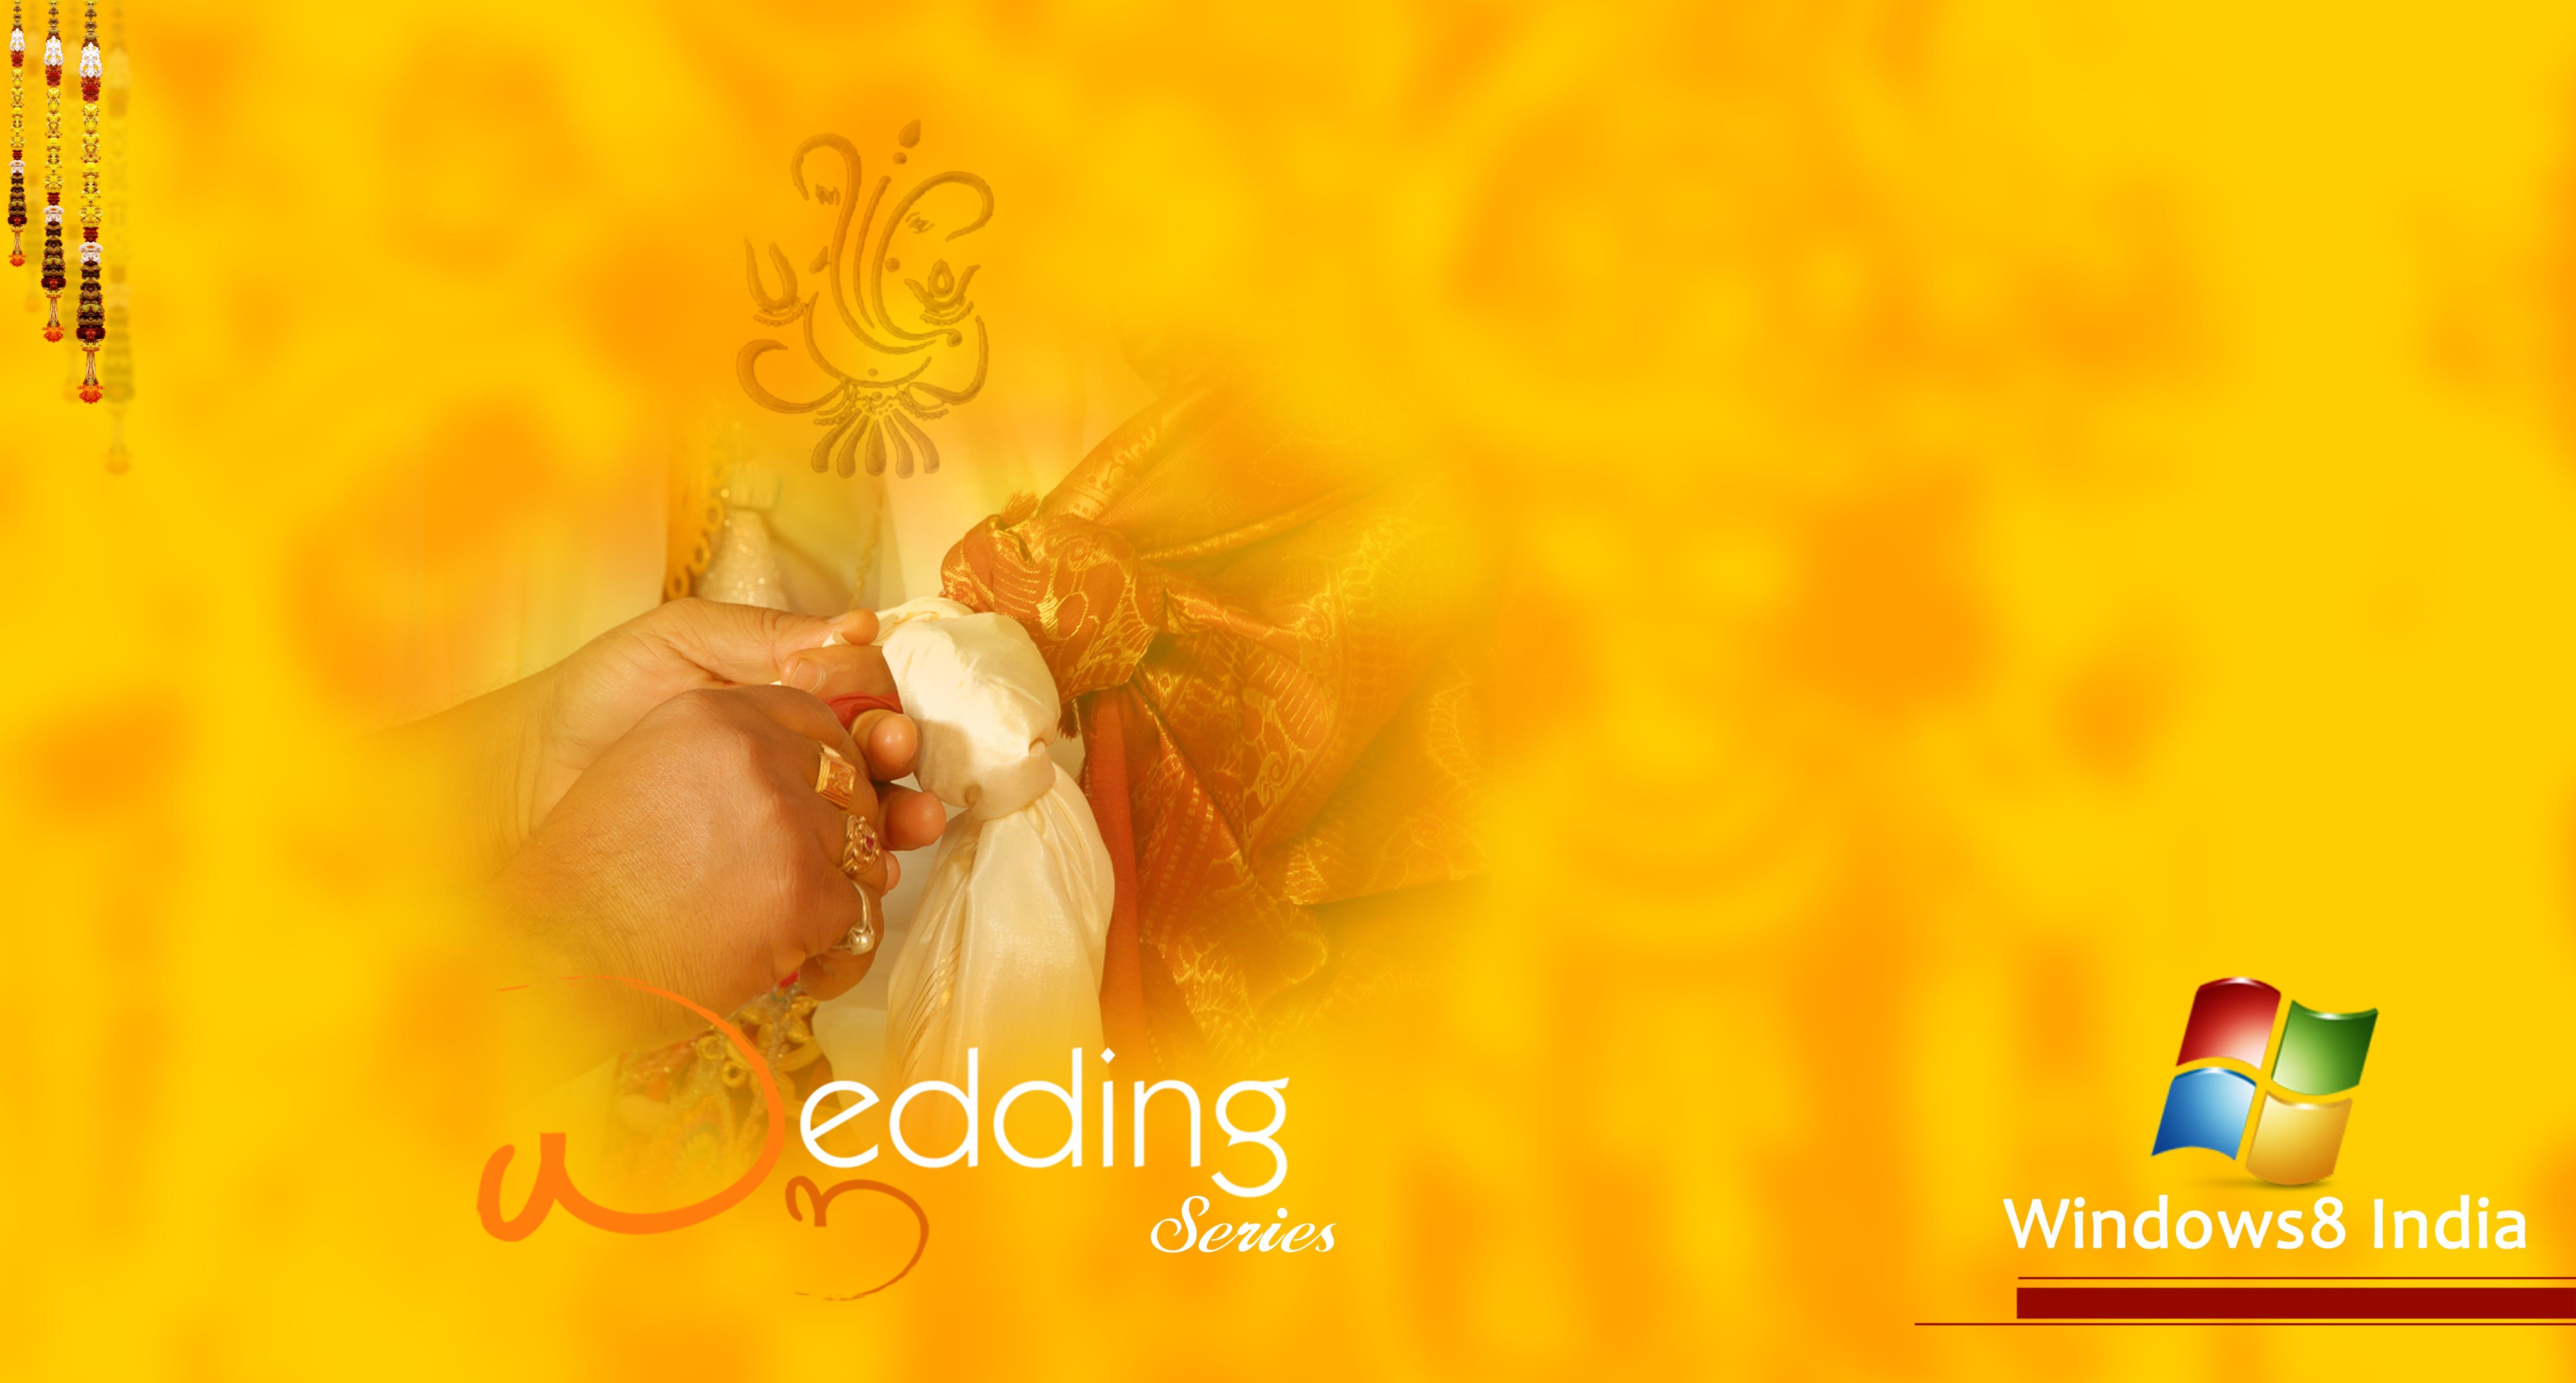 Windows8 Indian wedding Style. Wedding background image, Wedding background, Wedding image